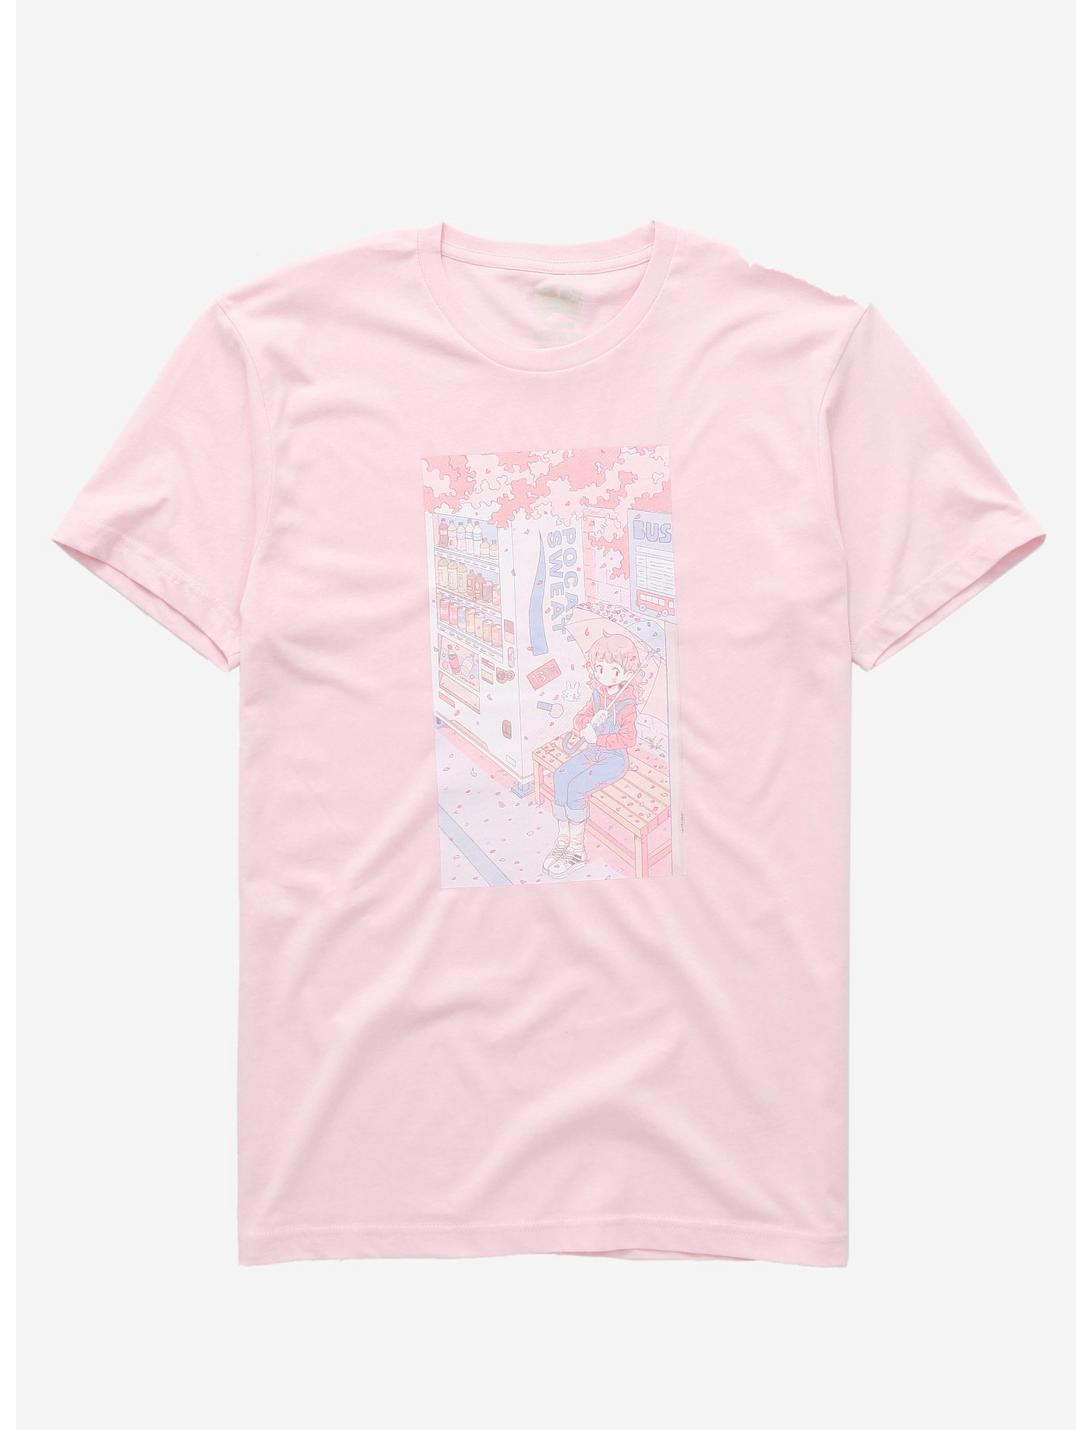 Vapor95 Cherry Blossom Rain T-Shirt, MULTI, hi-res